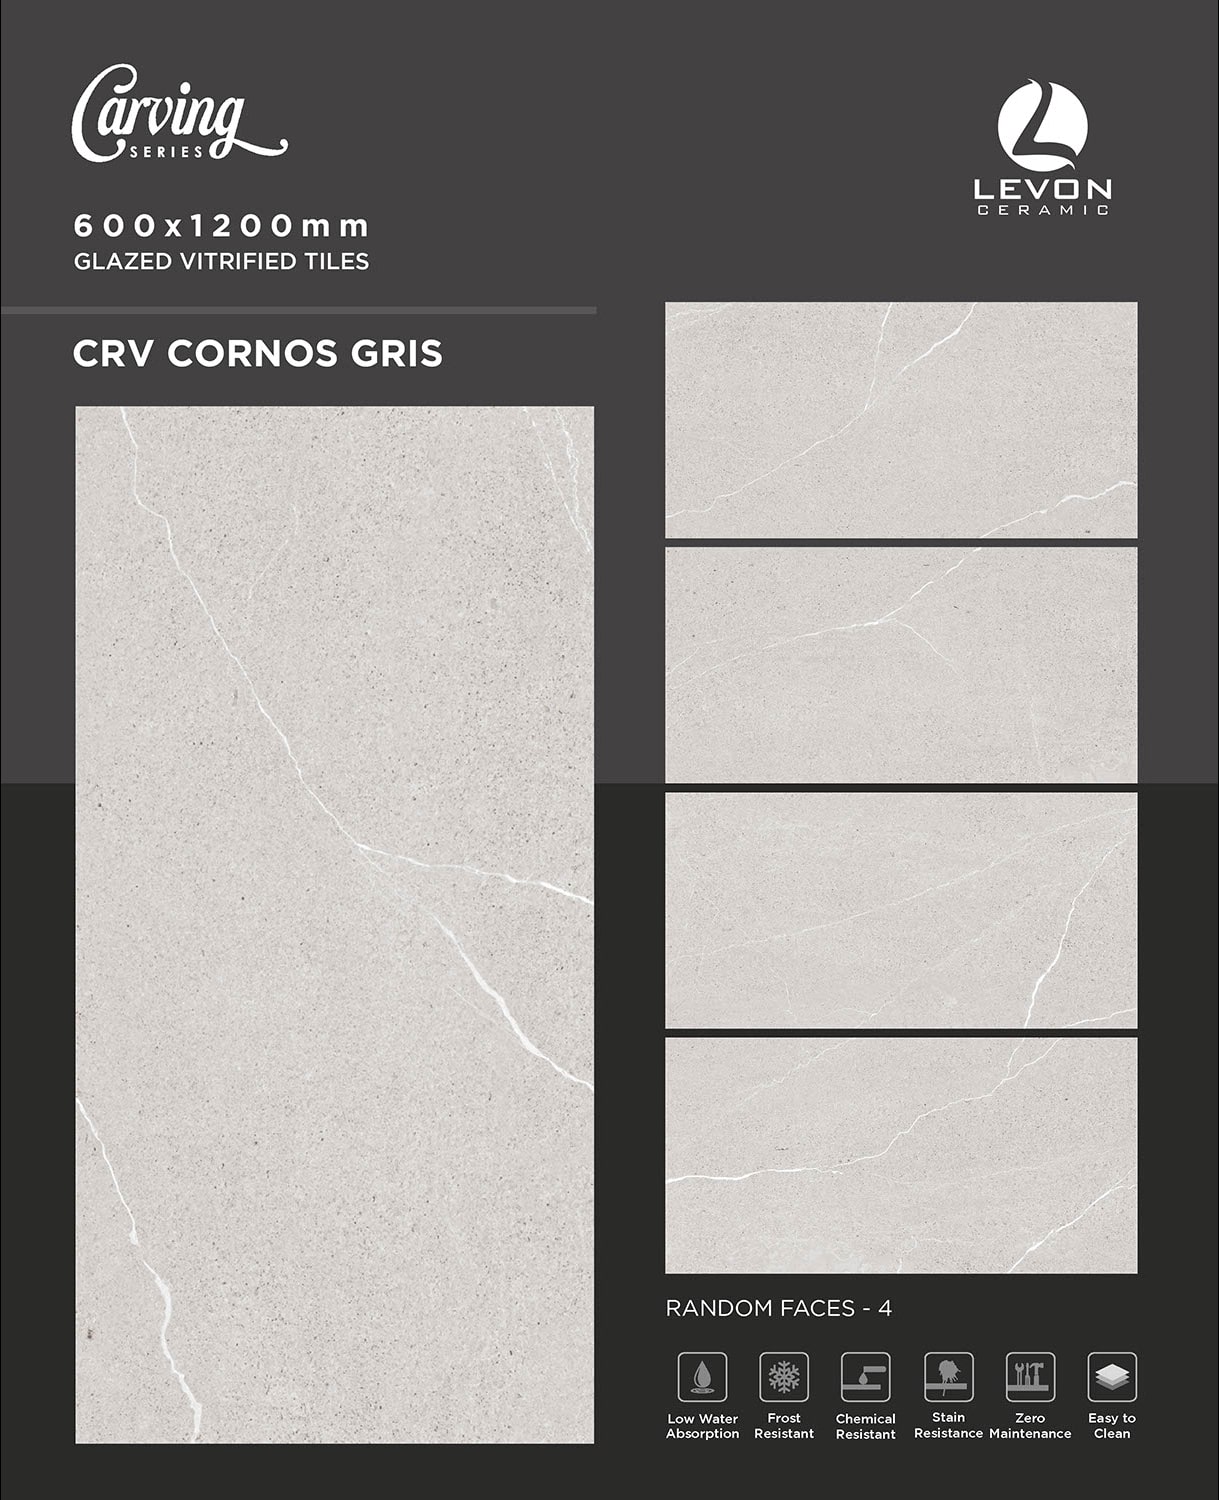 CRV Cornos Gris - Product